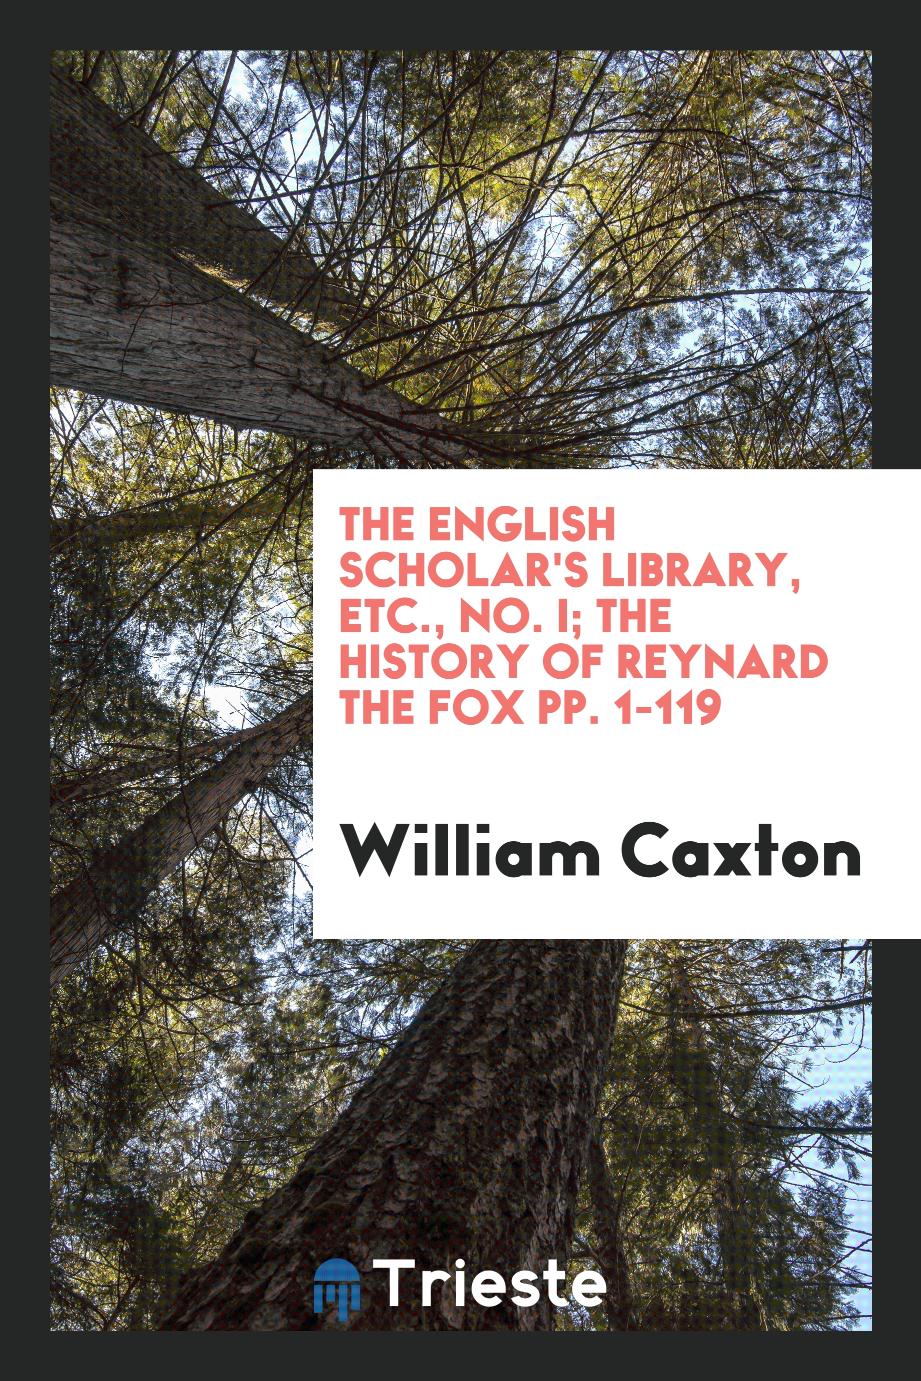 The English Scholar's Library, etc., No. I; The history of Reynard the Fox pp. 1-119